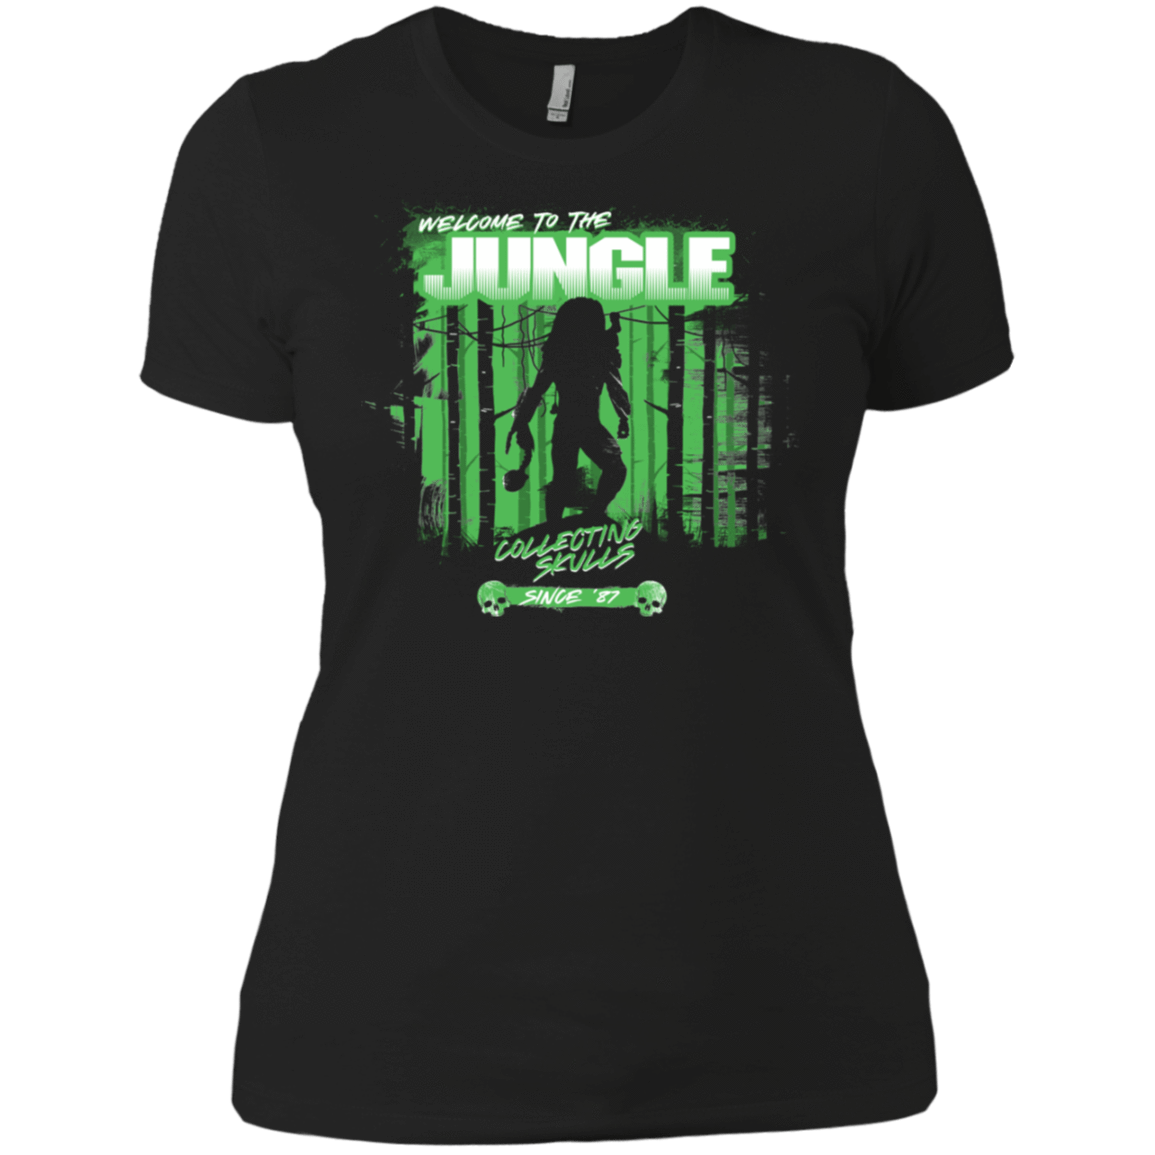 T-Shirts Black / X-Small Welcome to Jungle Women's Premium T-Shirt